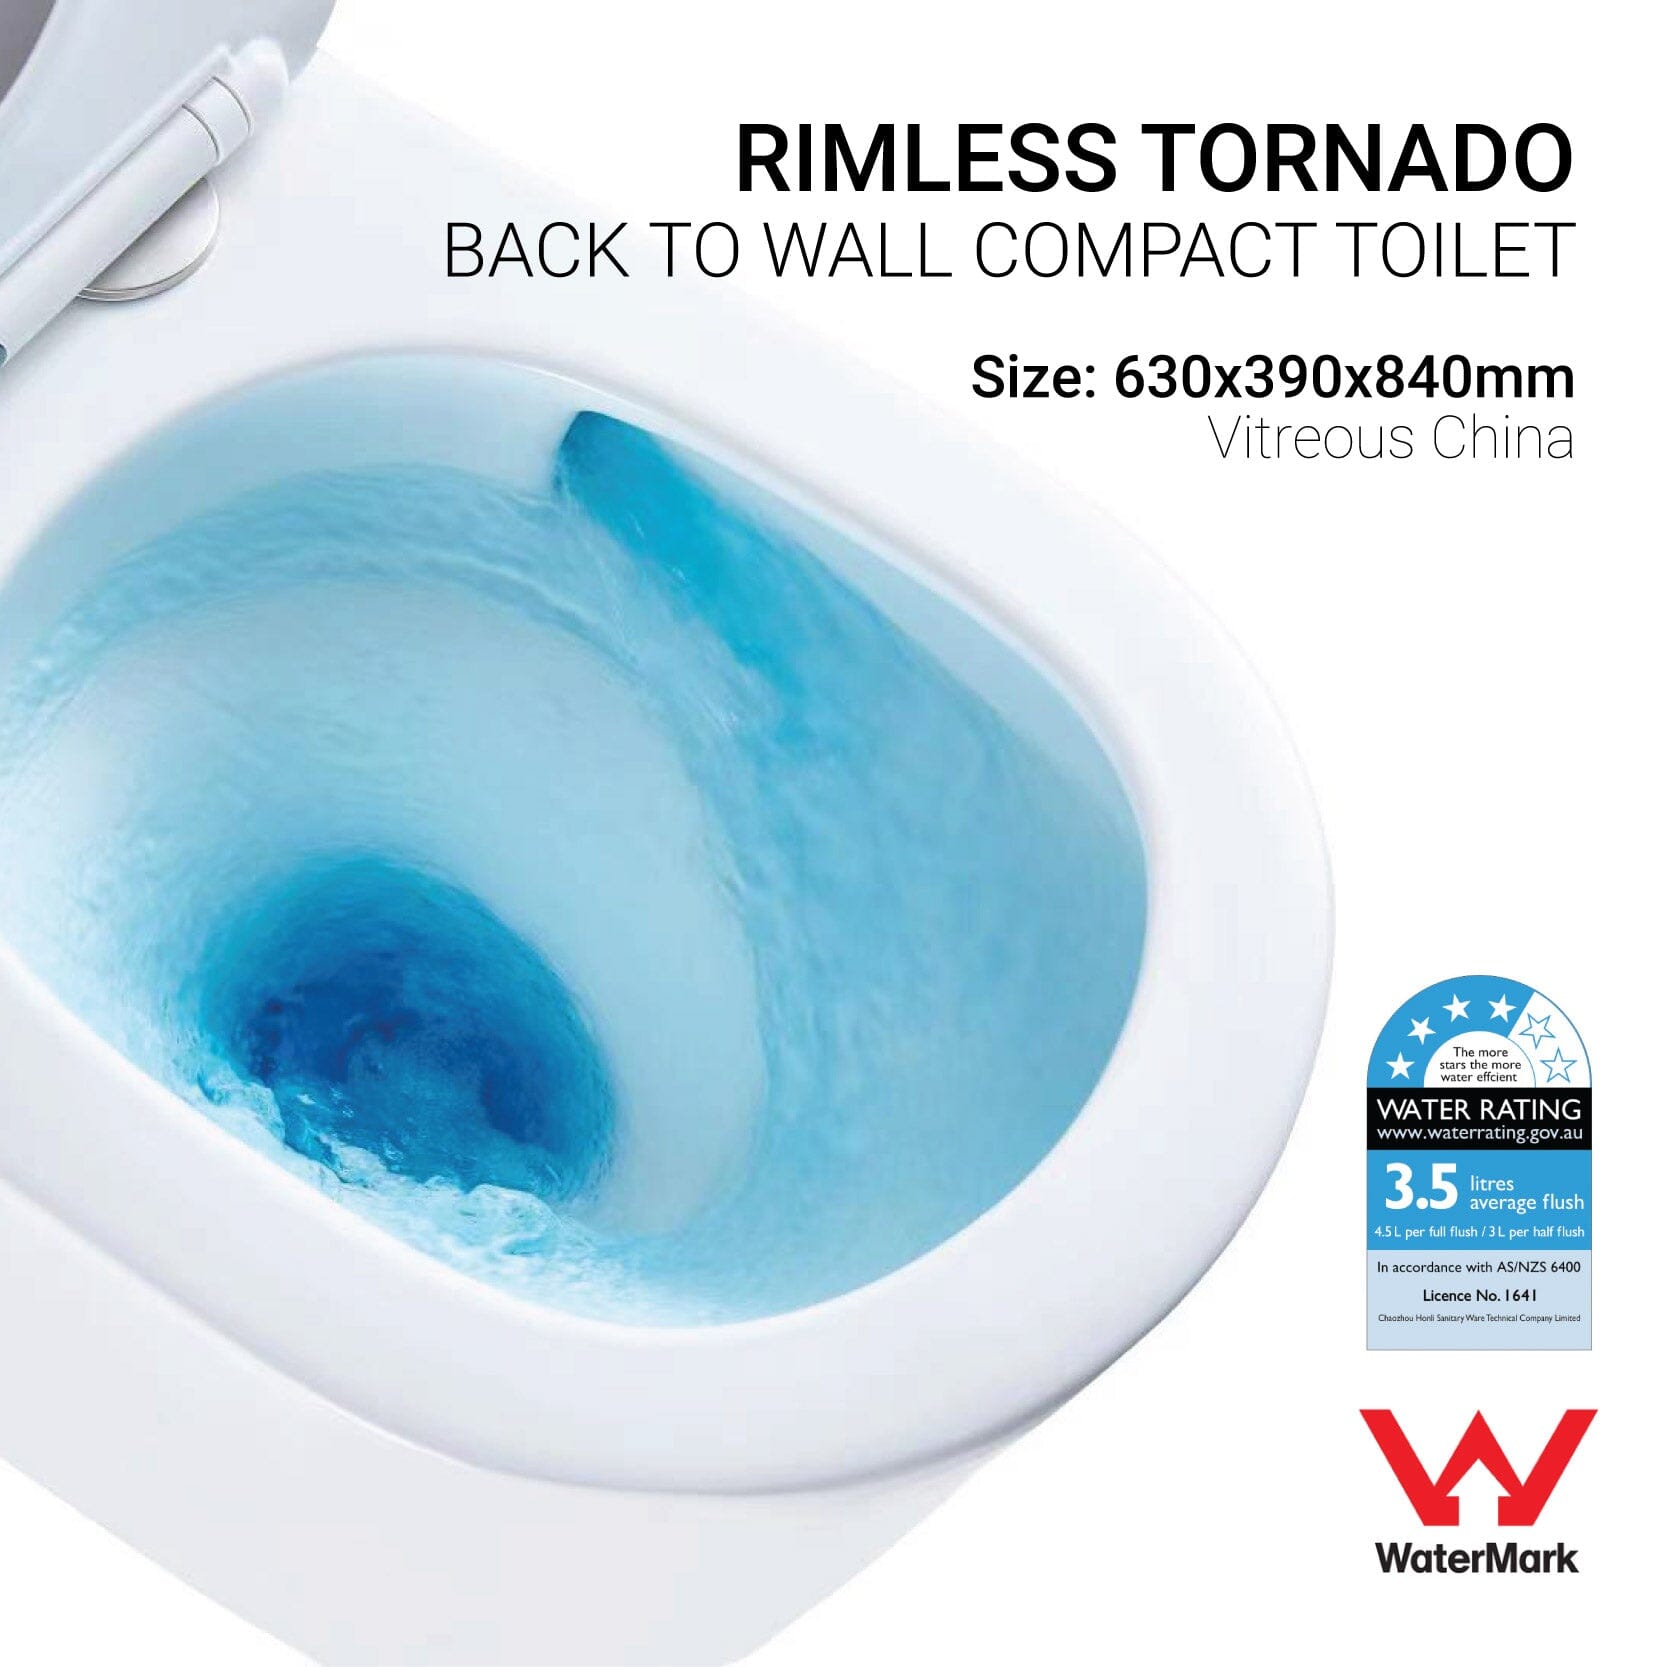 Max63 Rimless Tornado Compact Back to Wall Toilet Toilets Arova 